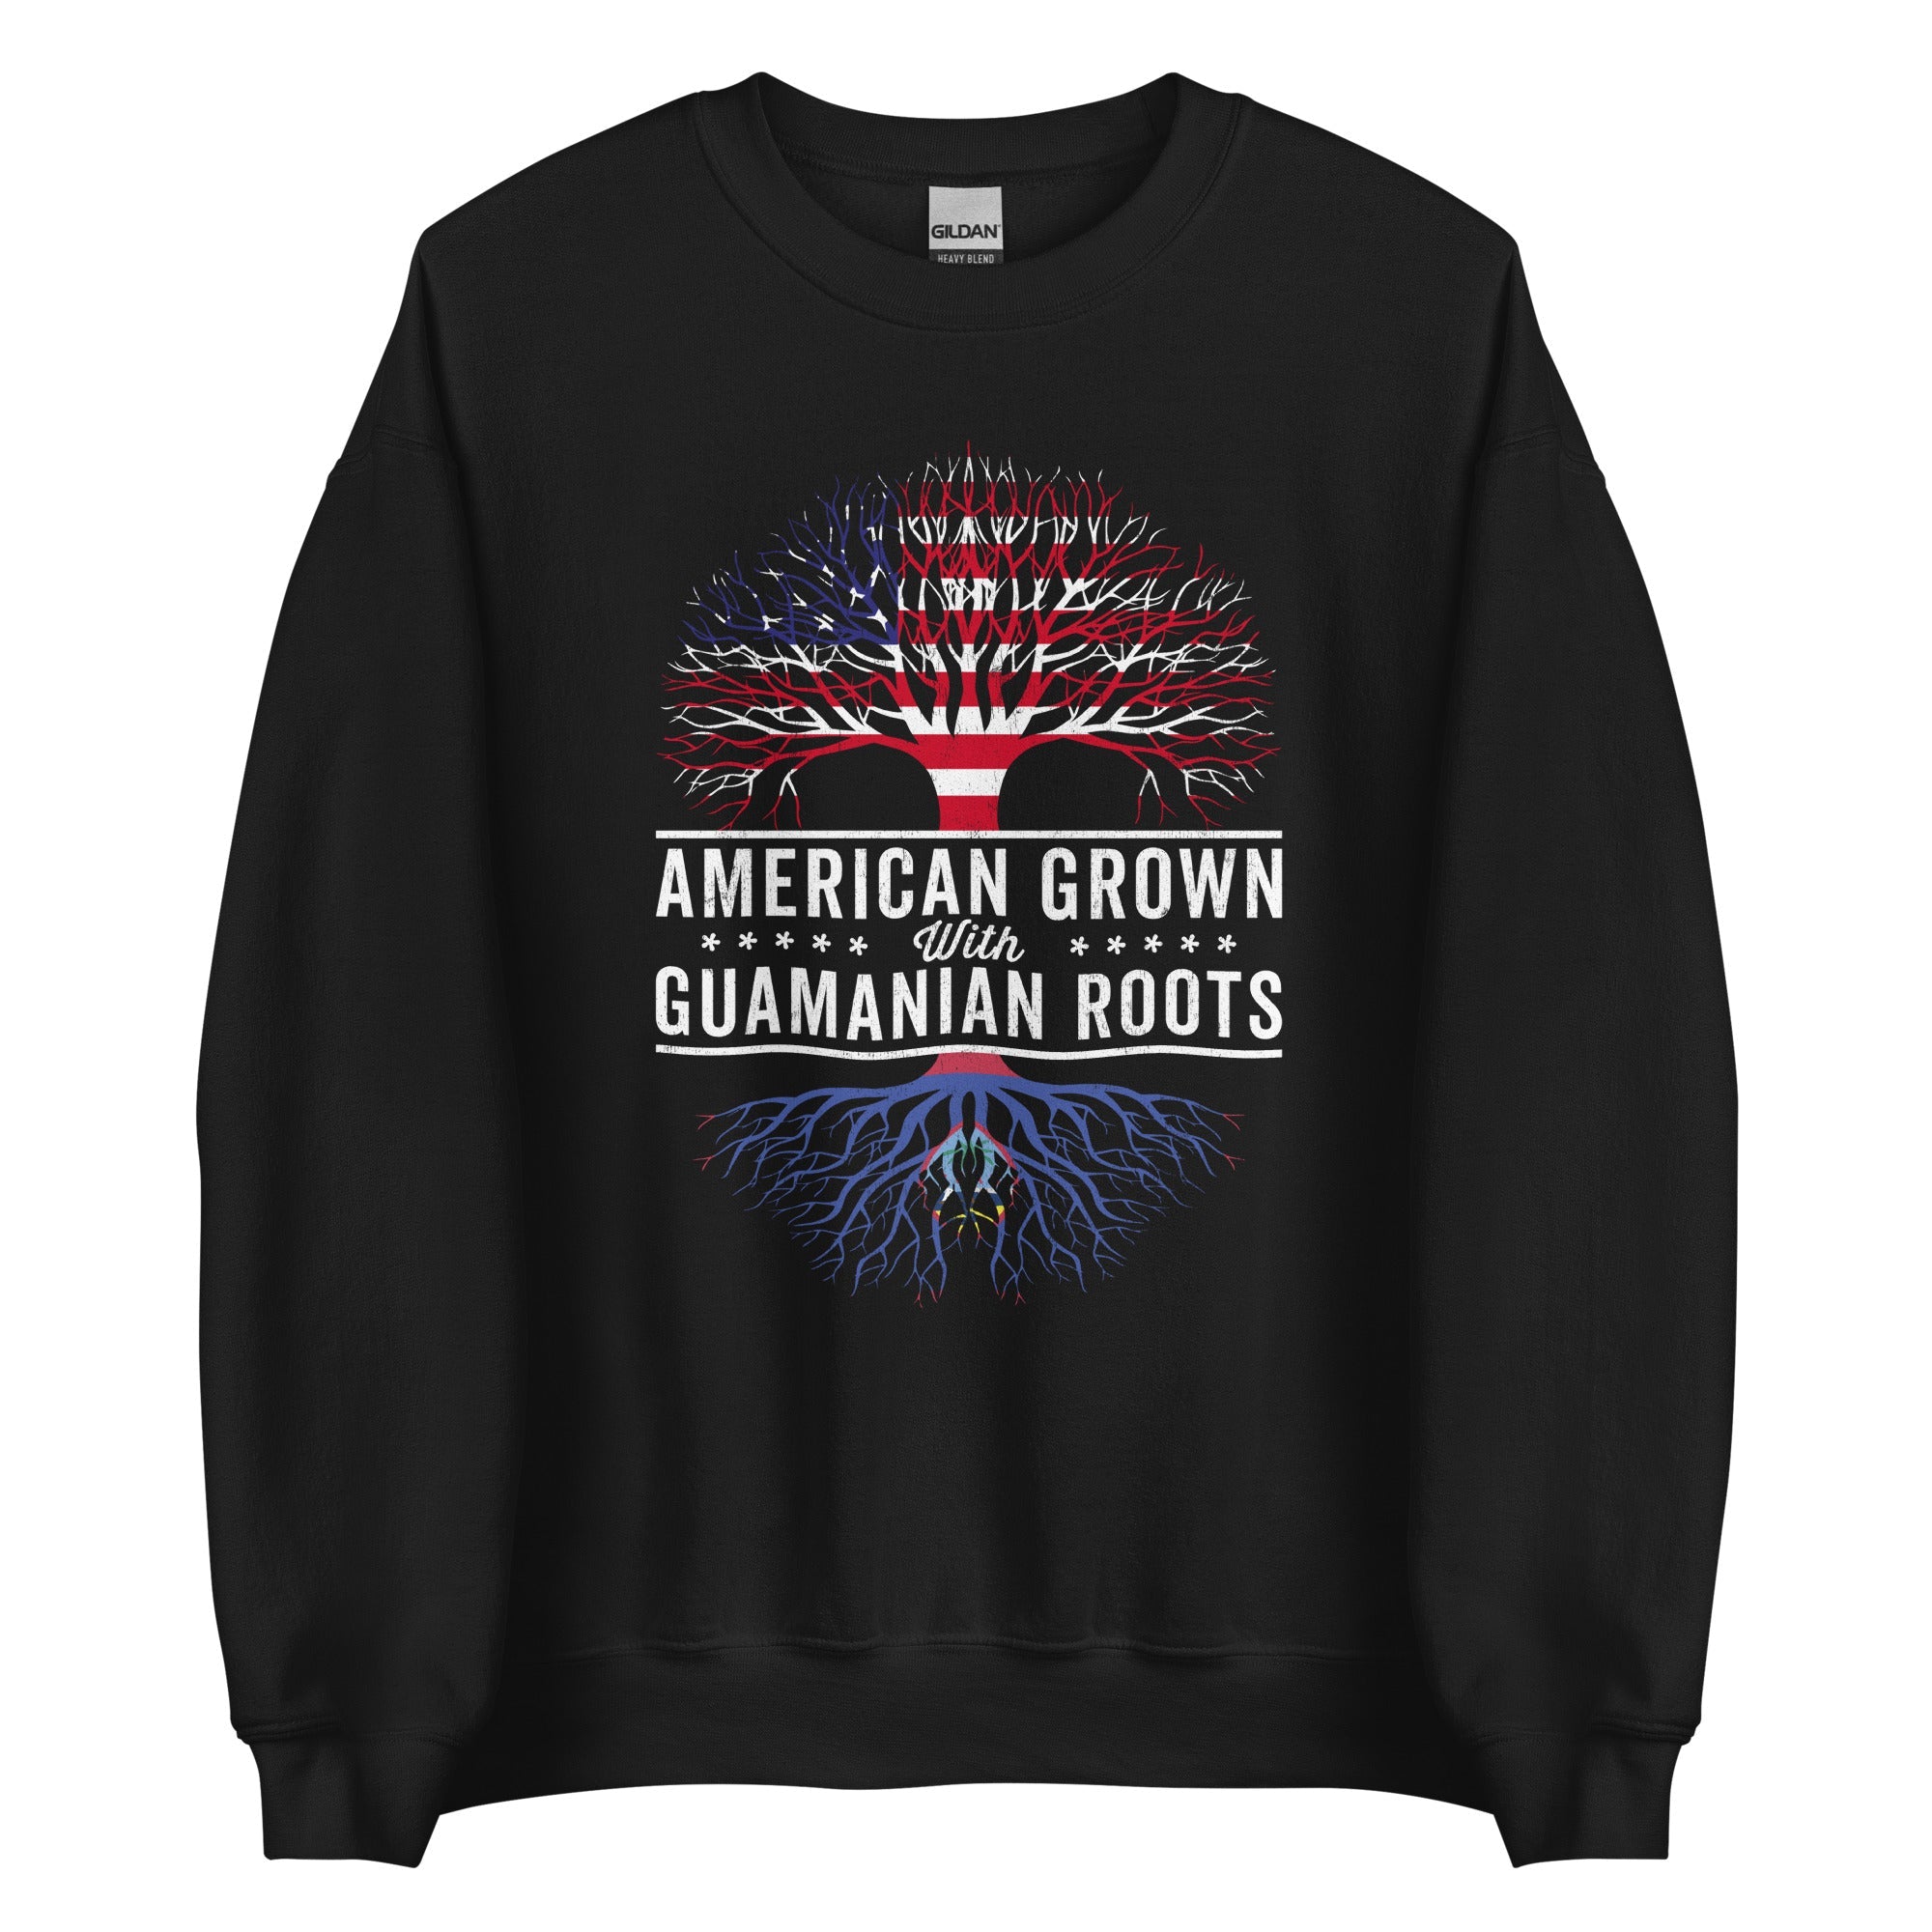 American Grown Guamanian Roots Flag Sweatshirt